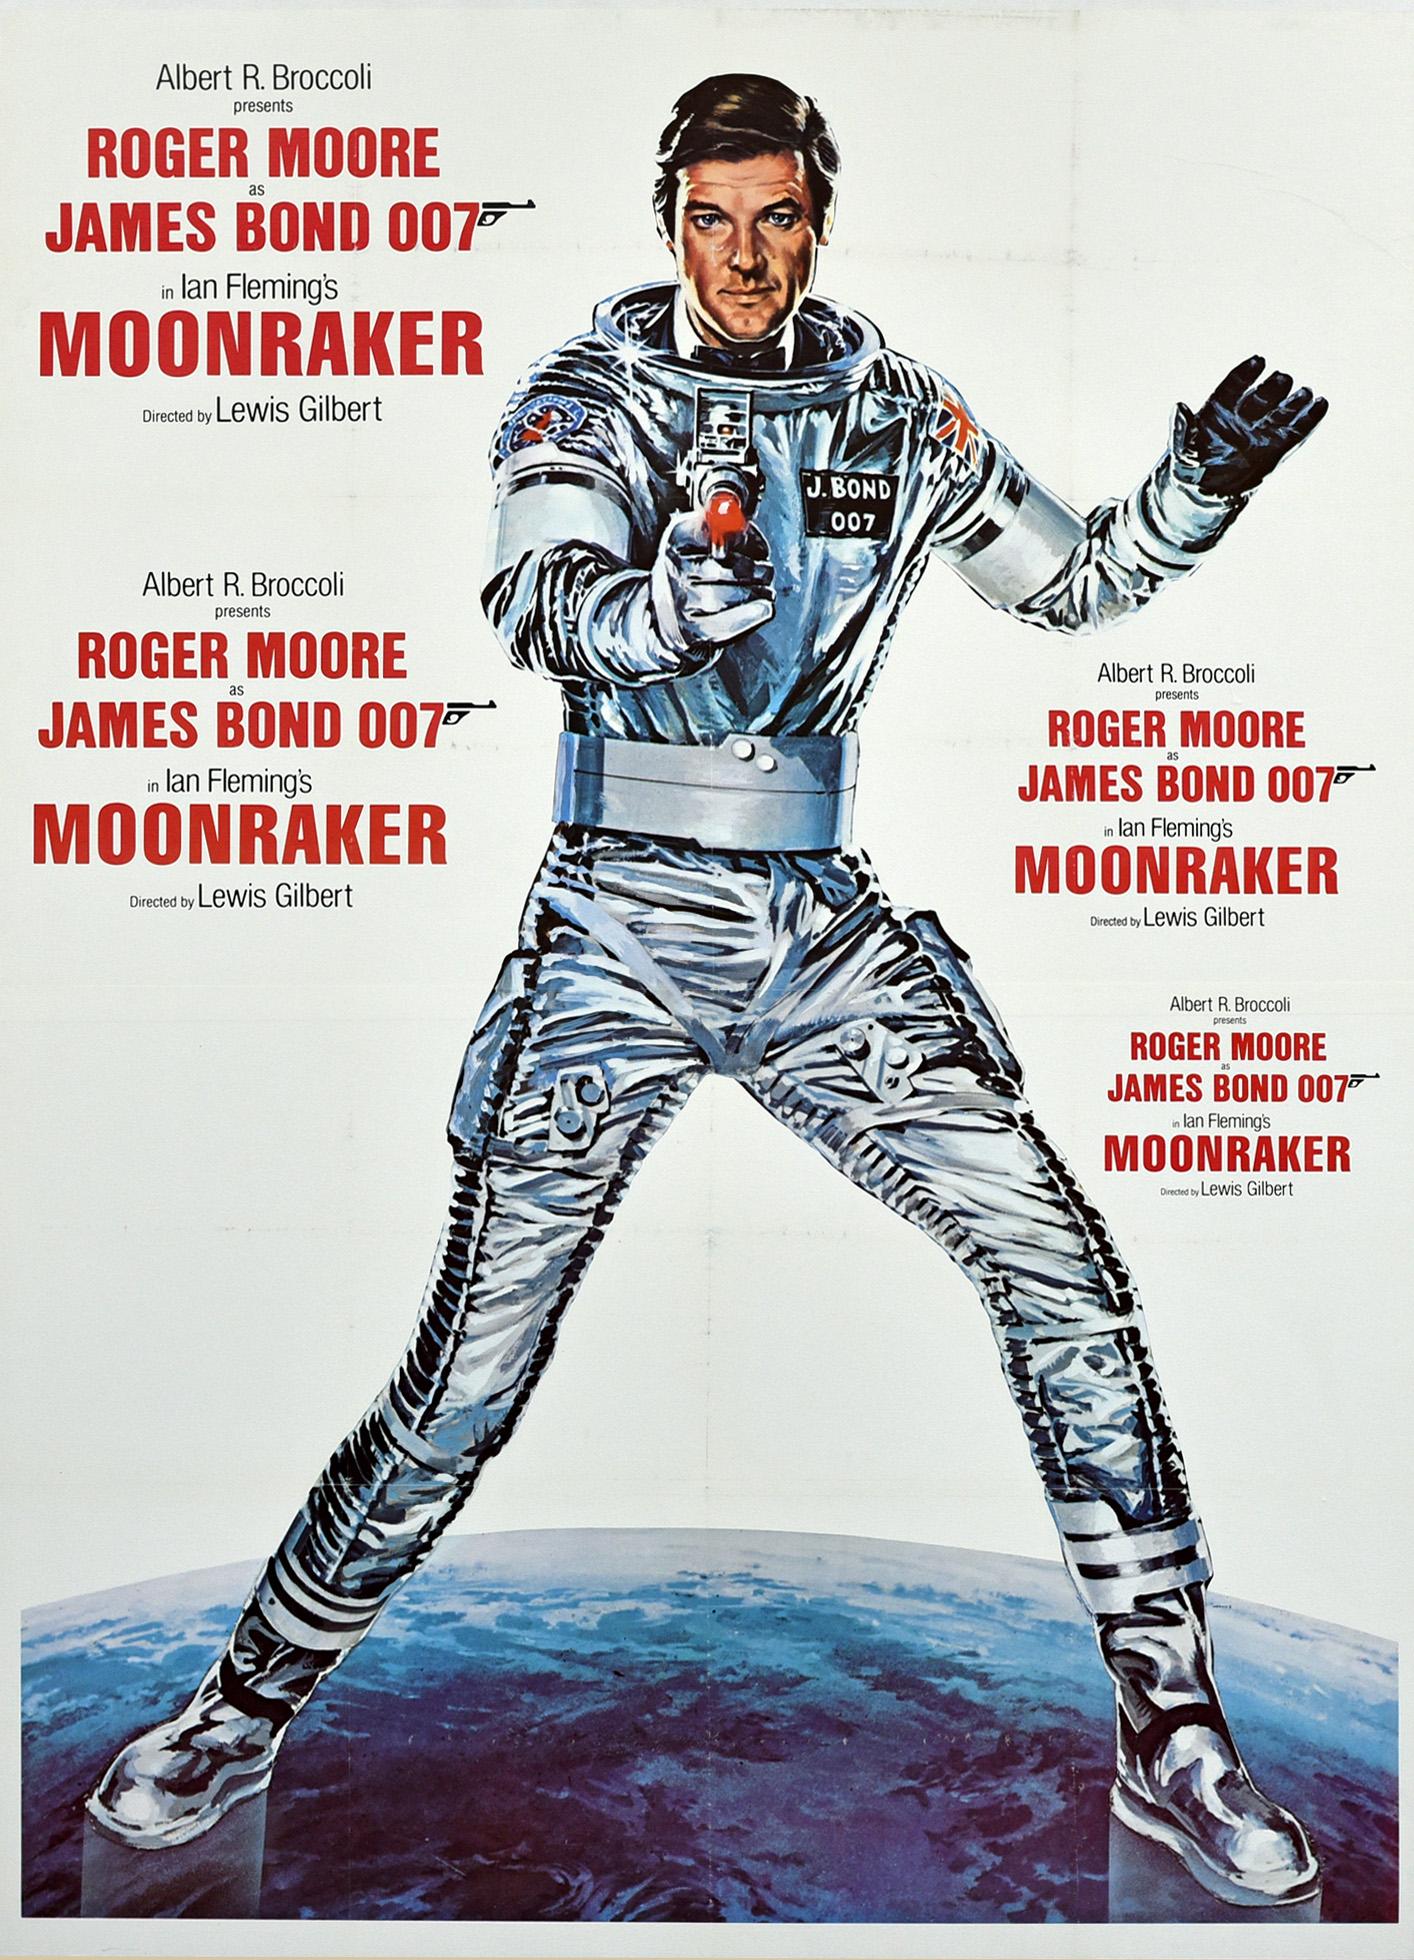 Dan Goozee Original Vintage James Bond Film Poster Moonraker Roger Moore 007 Movie Art For Sale At 1stdibs